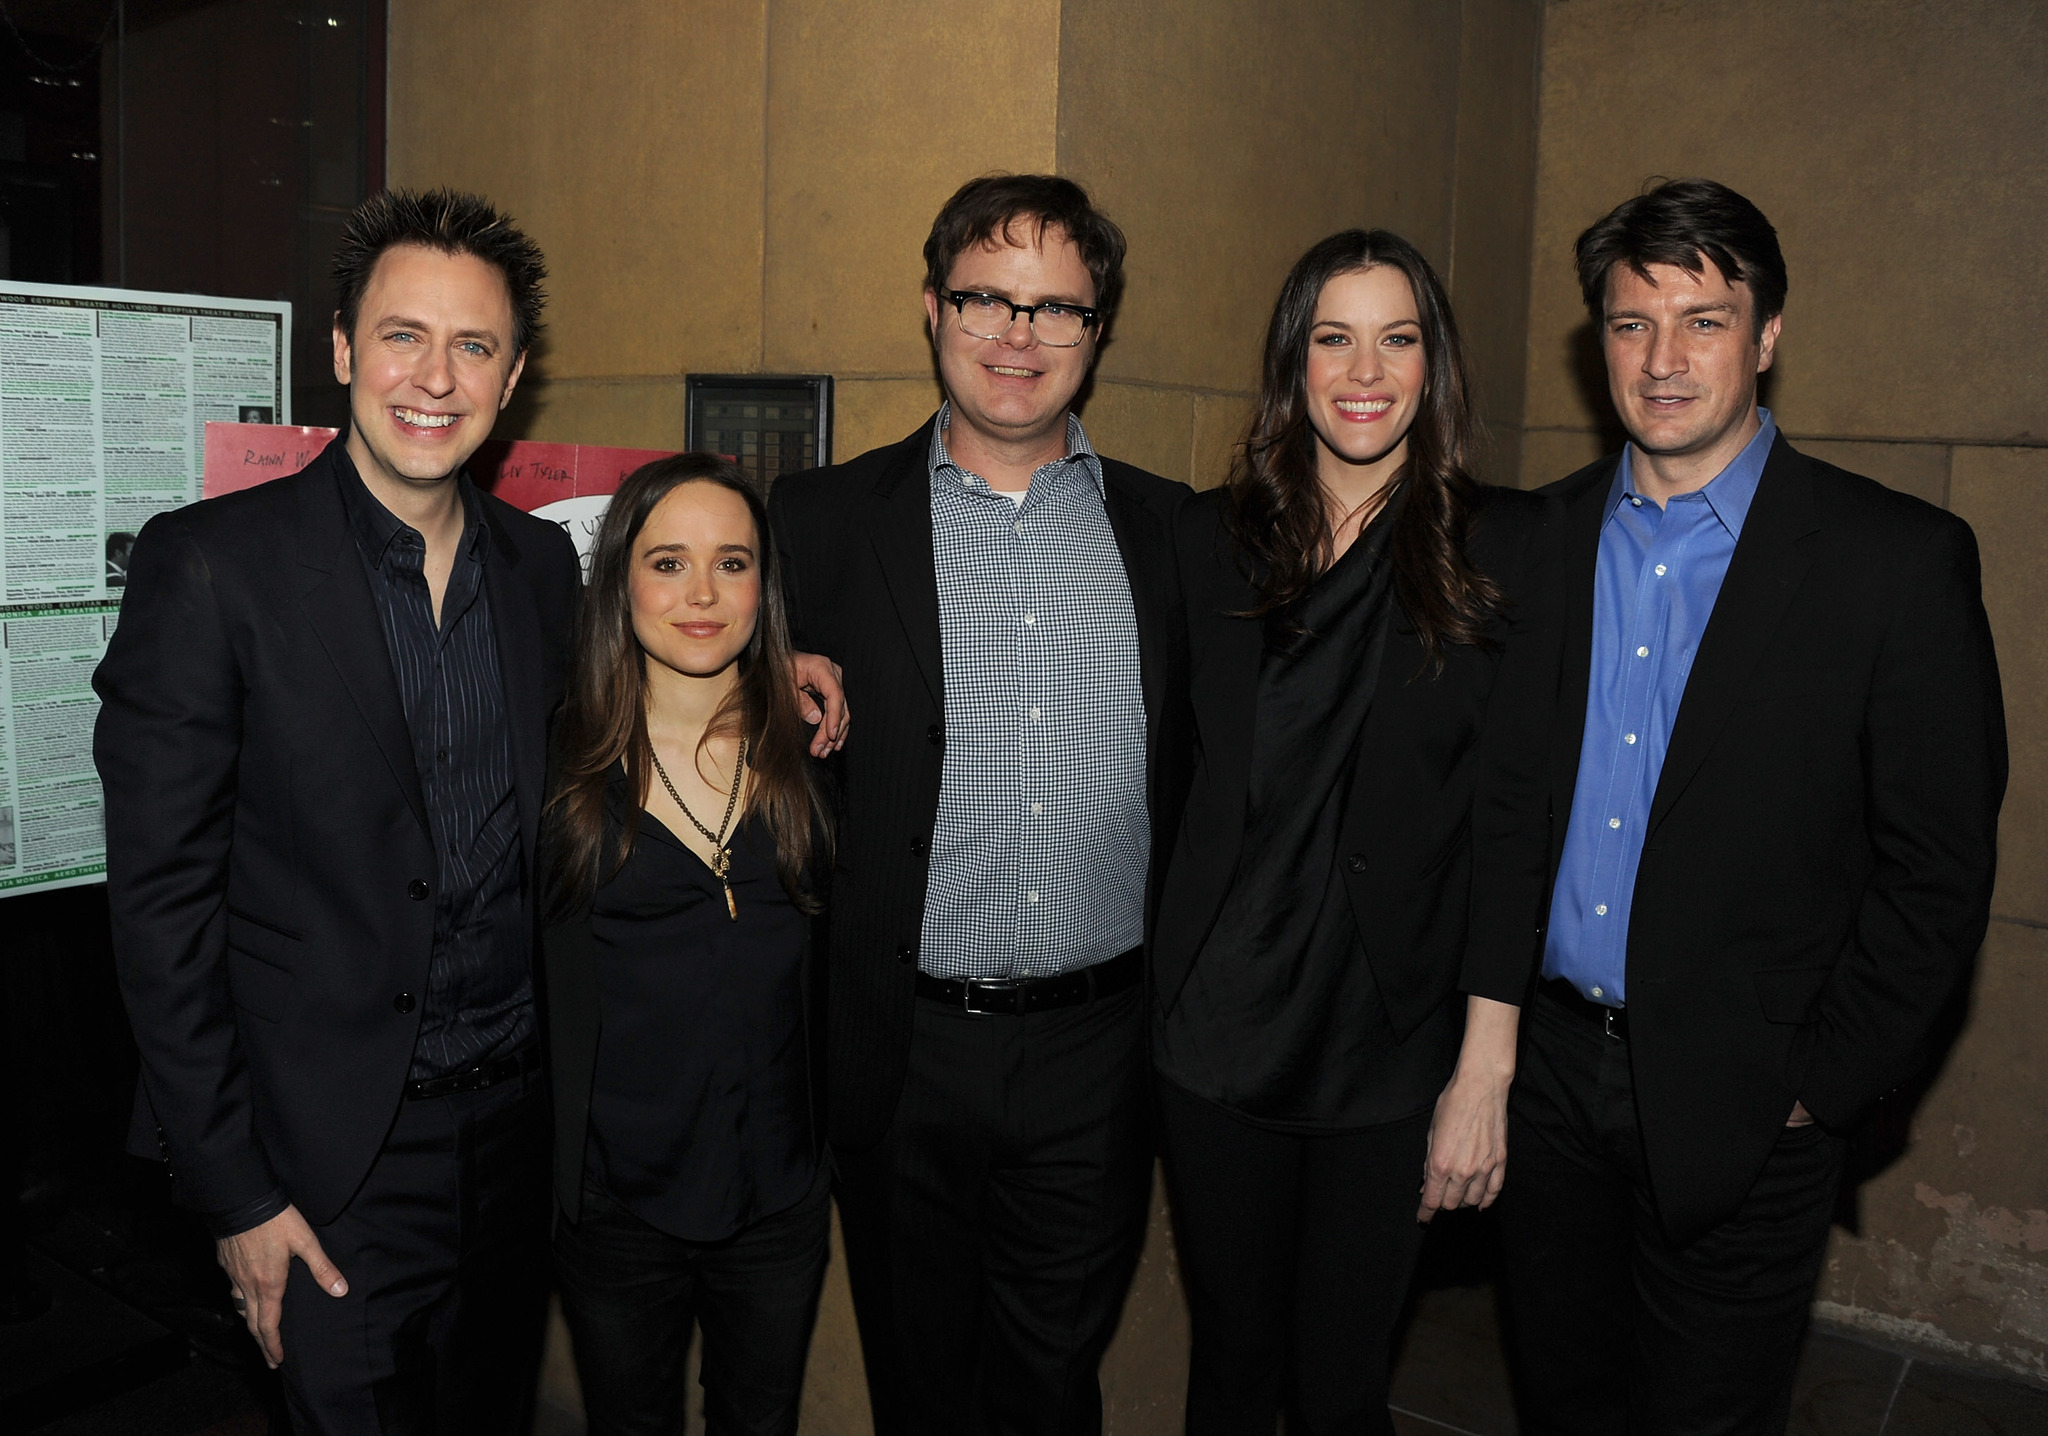 Liv Tyler, Nathan Fillion, James Gunn, Ellen Page and Rainn Wilson at event of Super (2010)